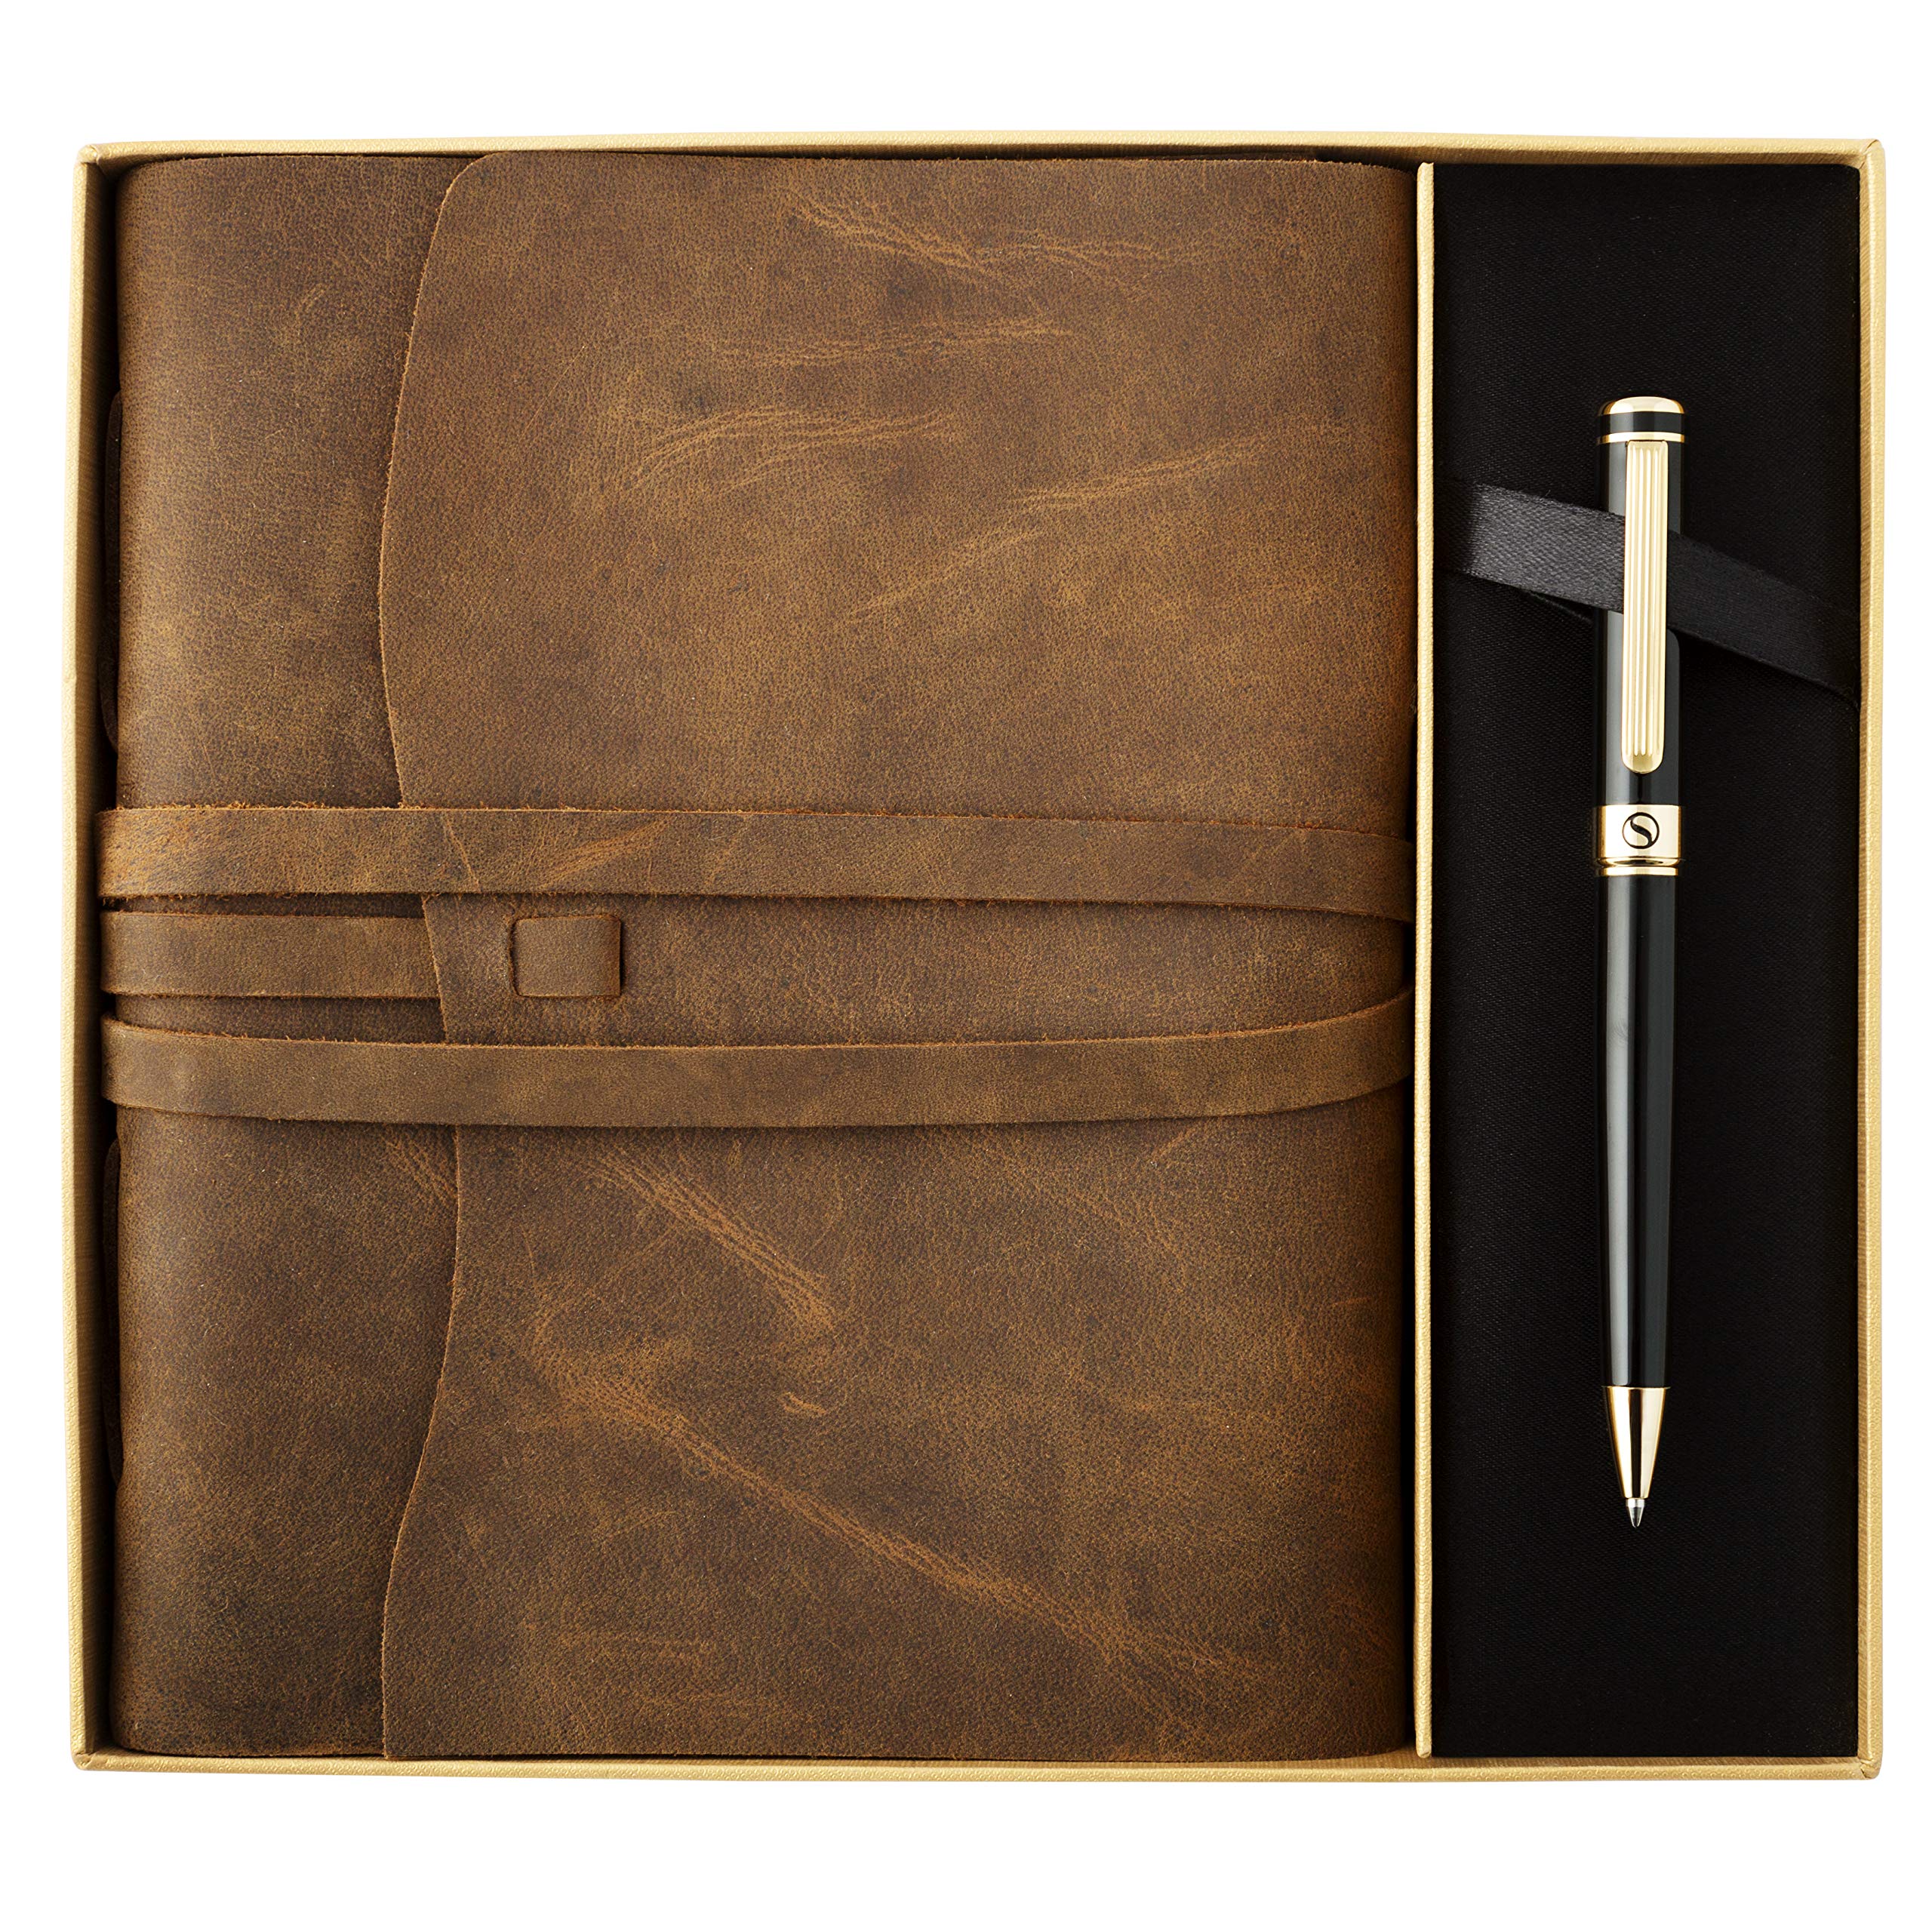 Scriveiner Premium Handmade Leather Journal – 8x6 with Black Lacquer & 24K Gold Luxury Ballpoint Pen